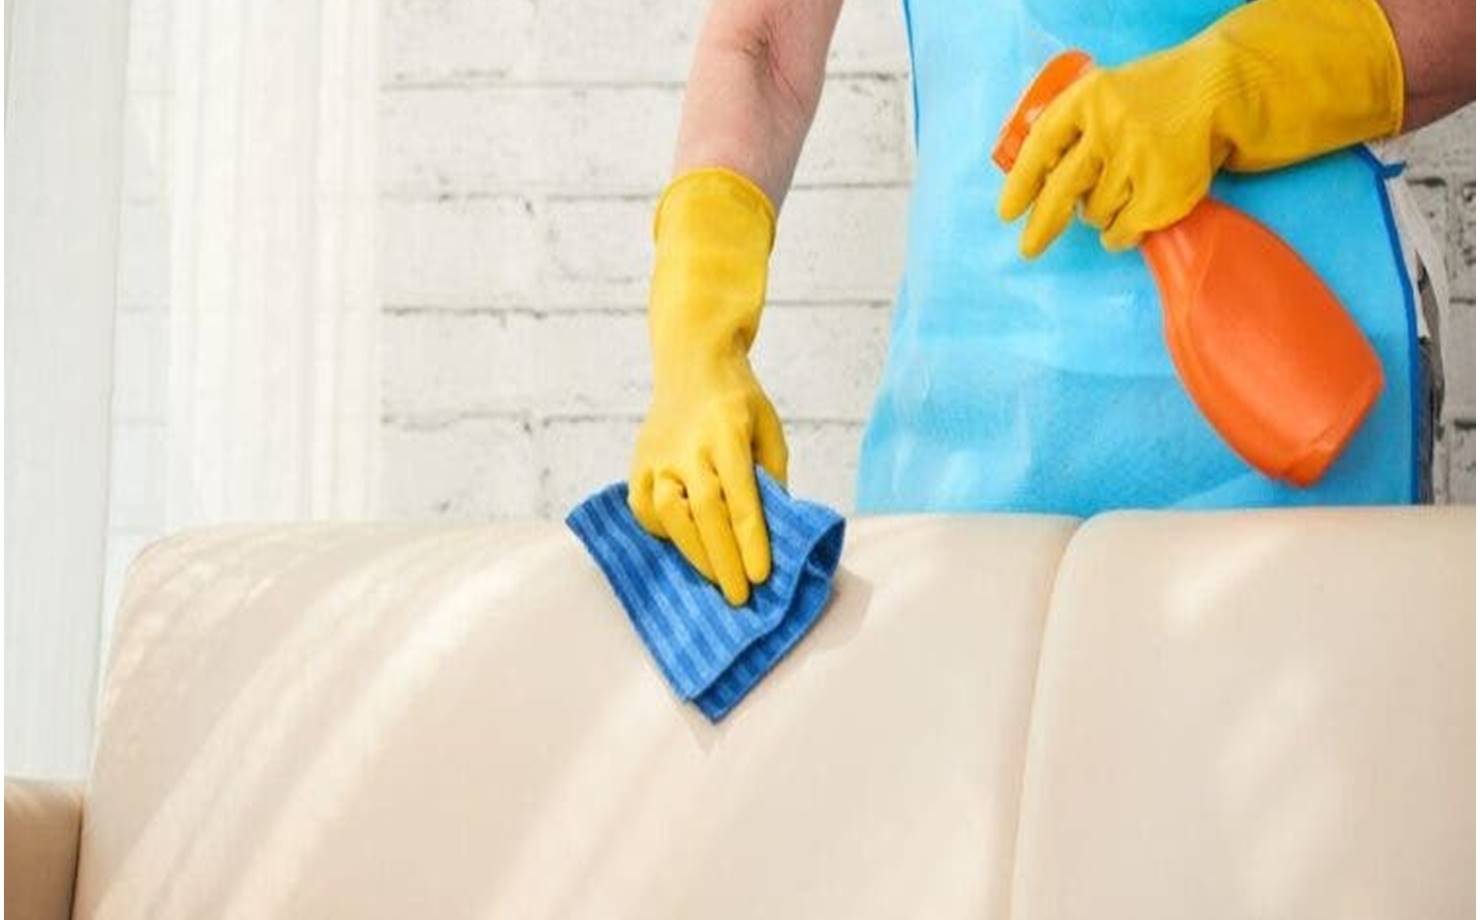 Mistura caseira para limpar estofados da casa e deixá-los como novos 